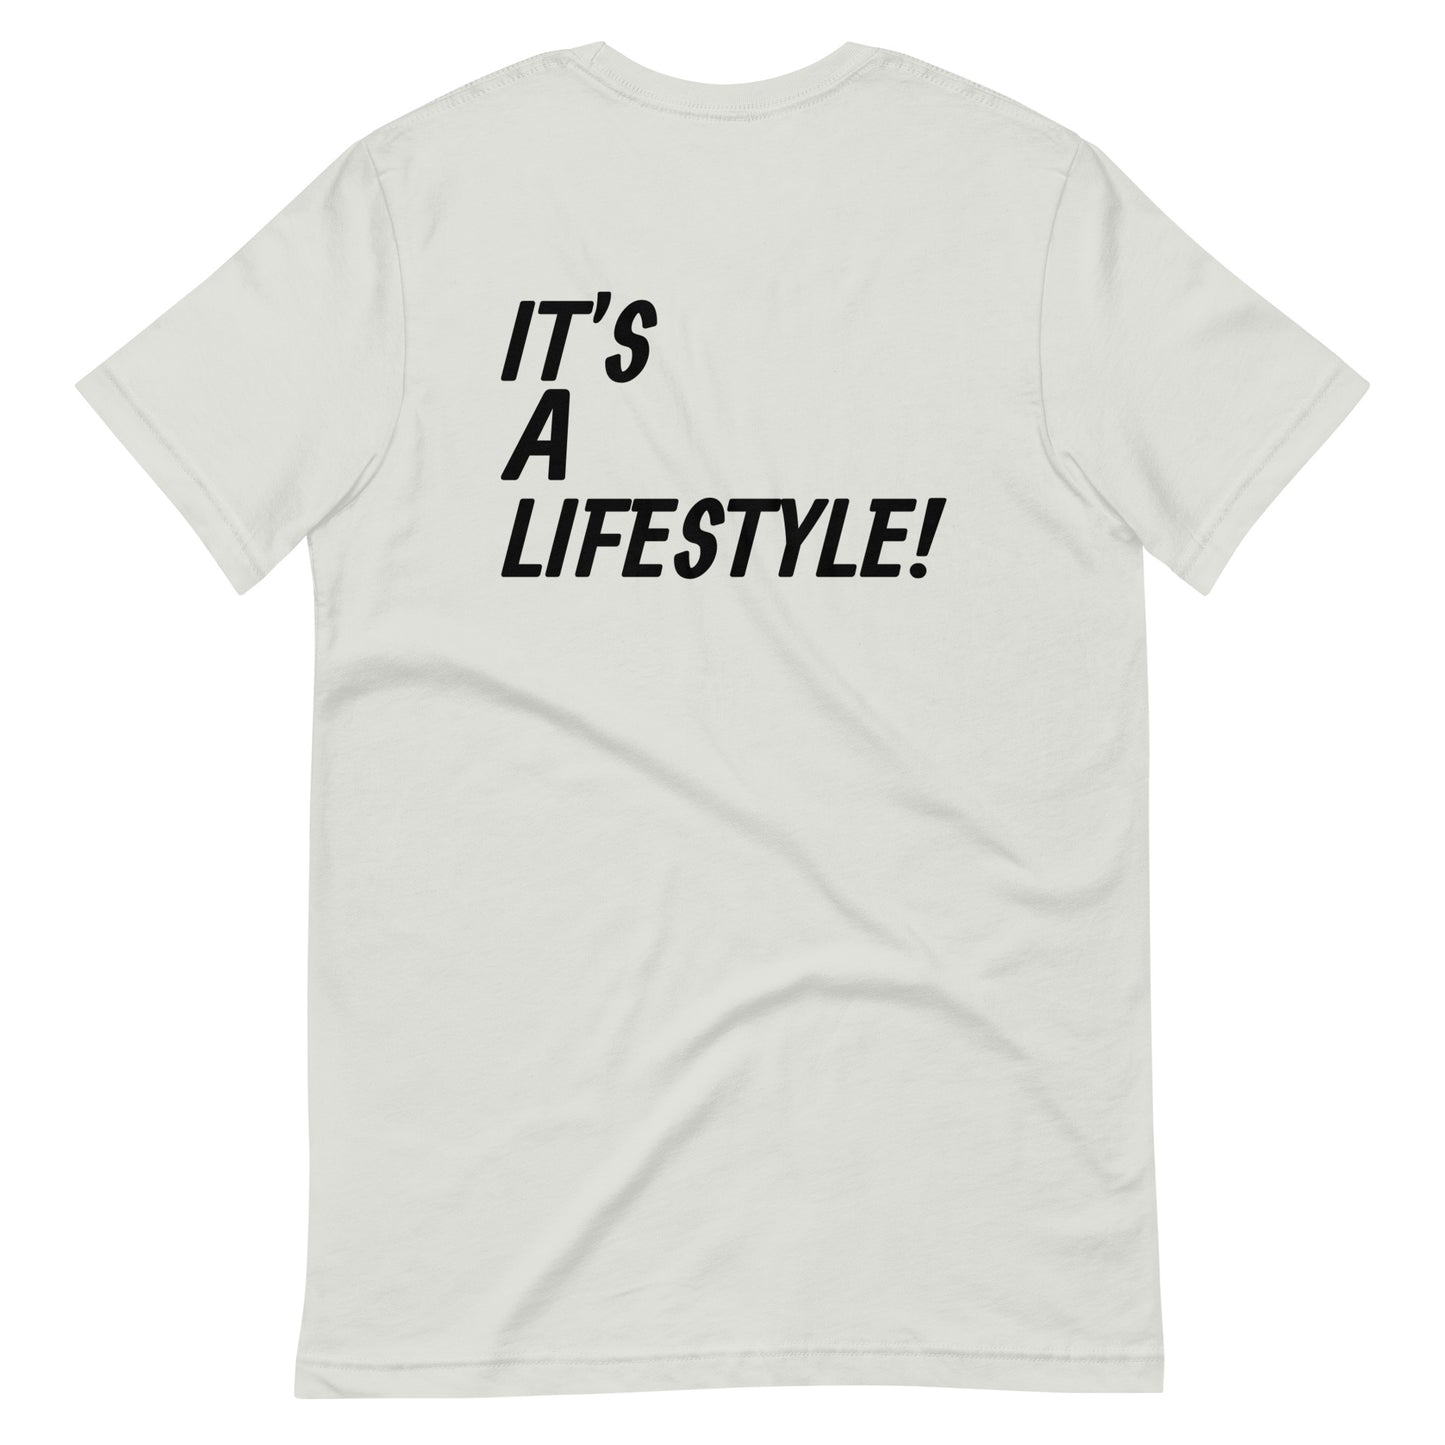 "LIFESTYLE" T-Shirt